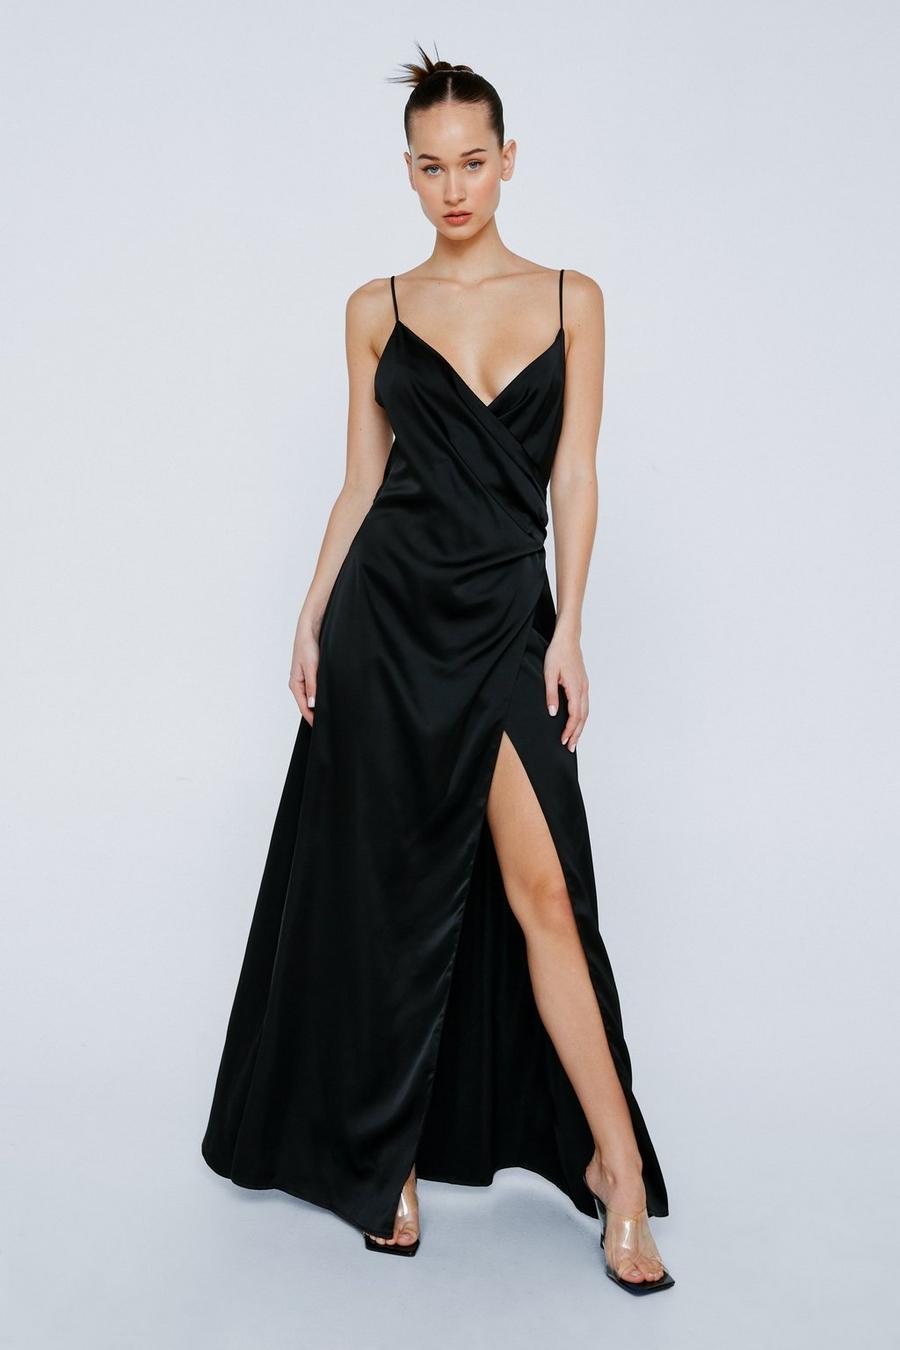 WOMEN FASHION Dresses Formal dress Lace openwork Black/White M discount 97% Sweet Miss formal dress 